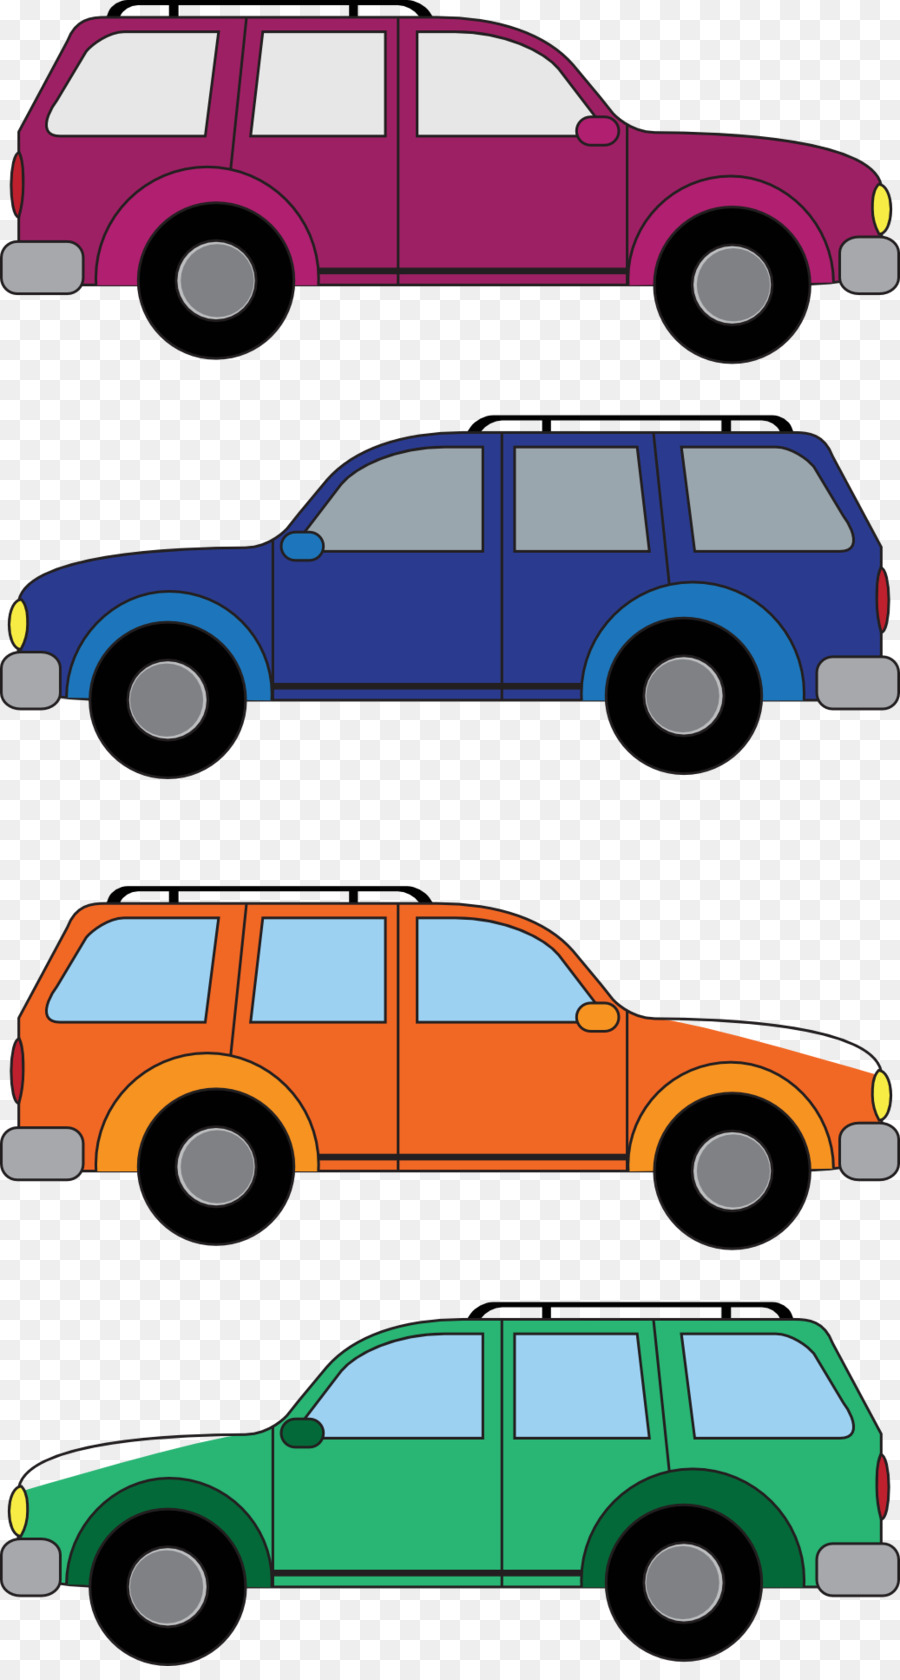 Sport utility veicolo, Auto, camion pick-up Chevrolet Suburban Van - Colorato Auto